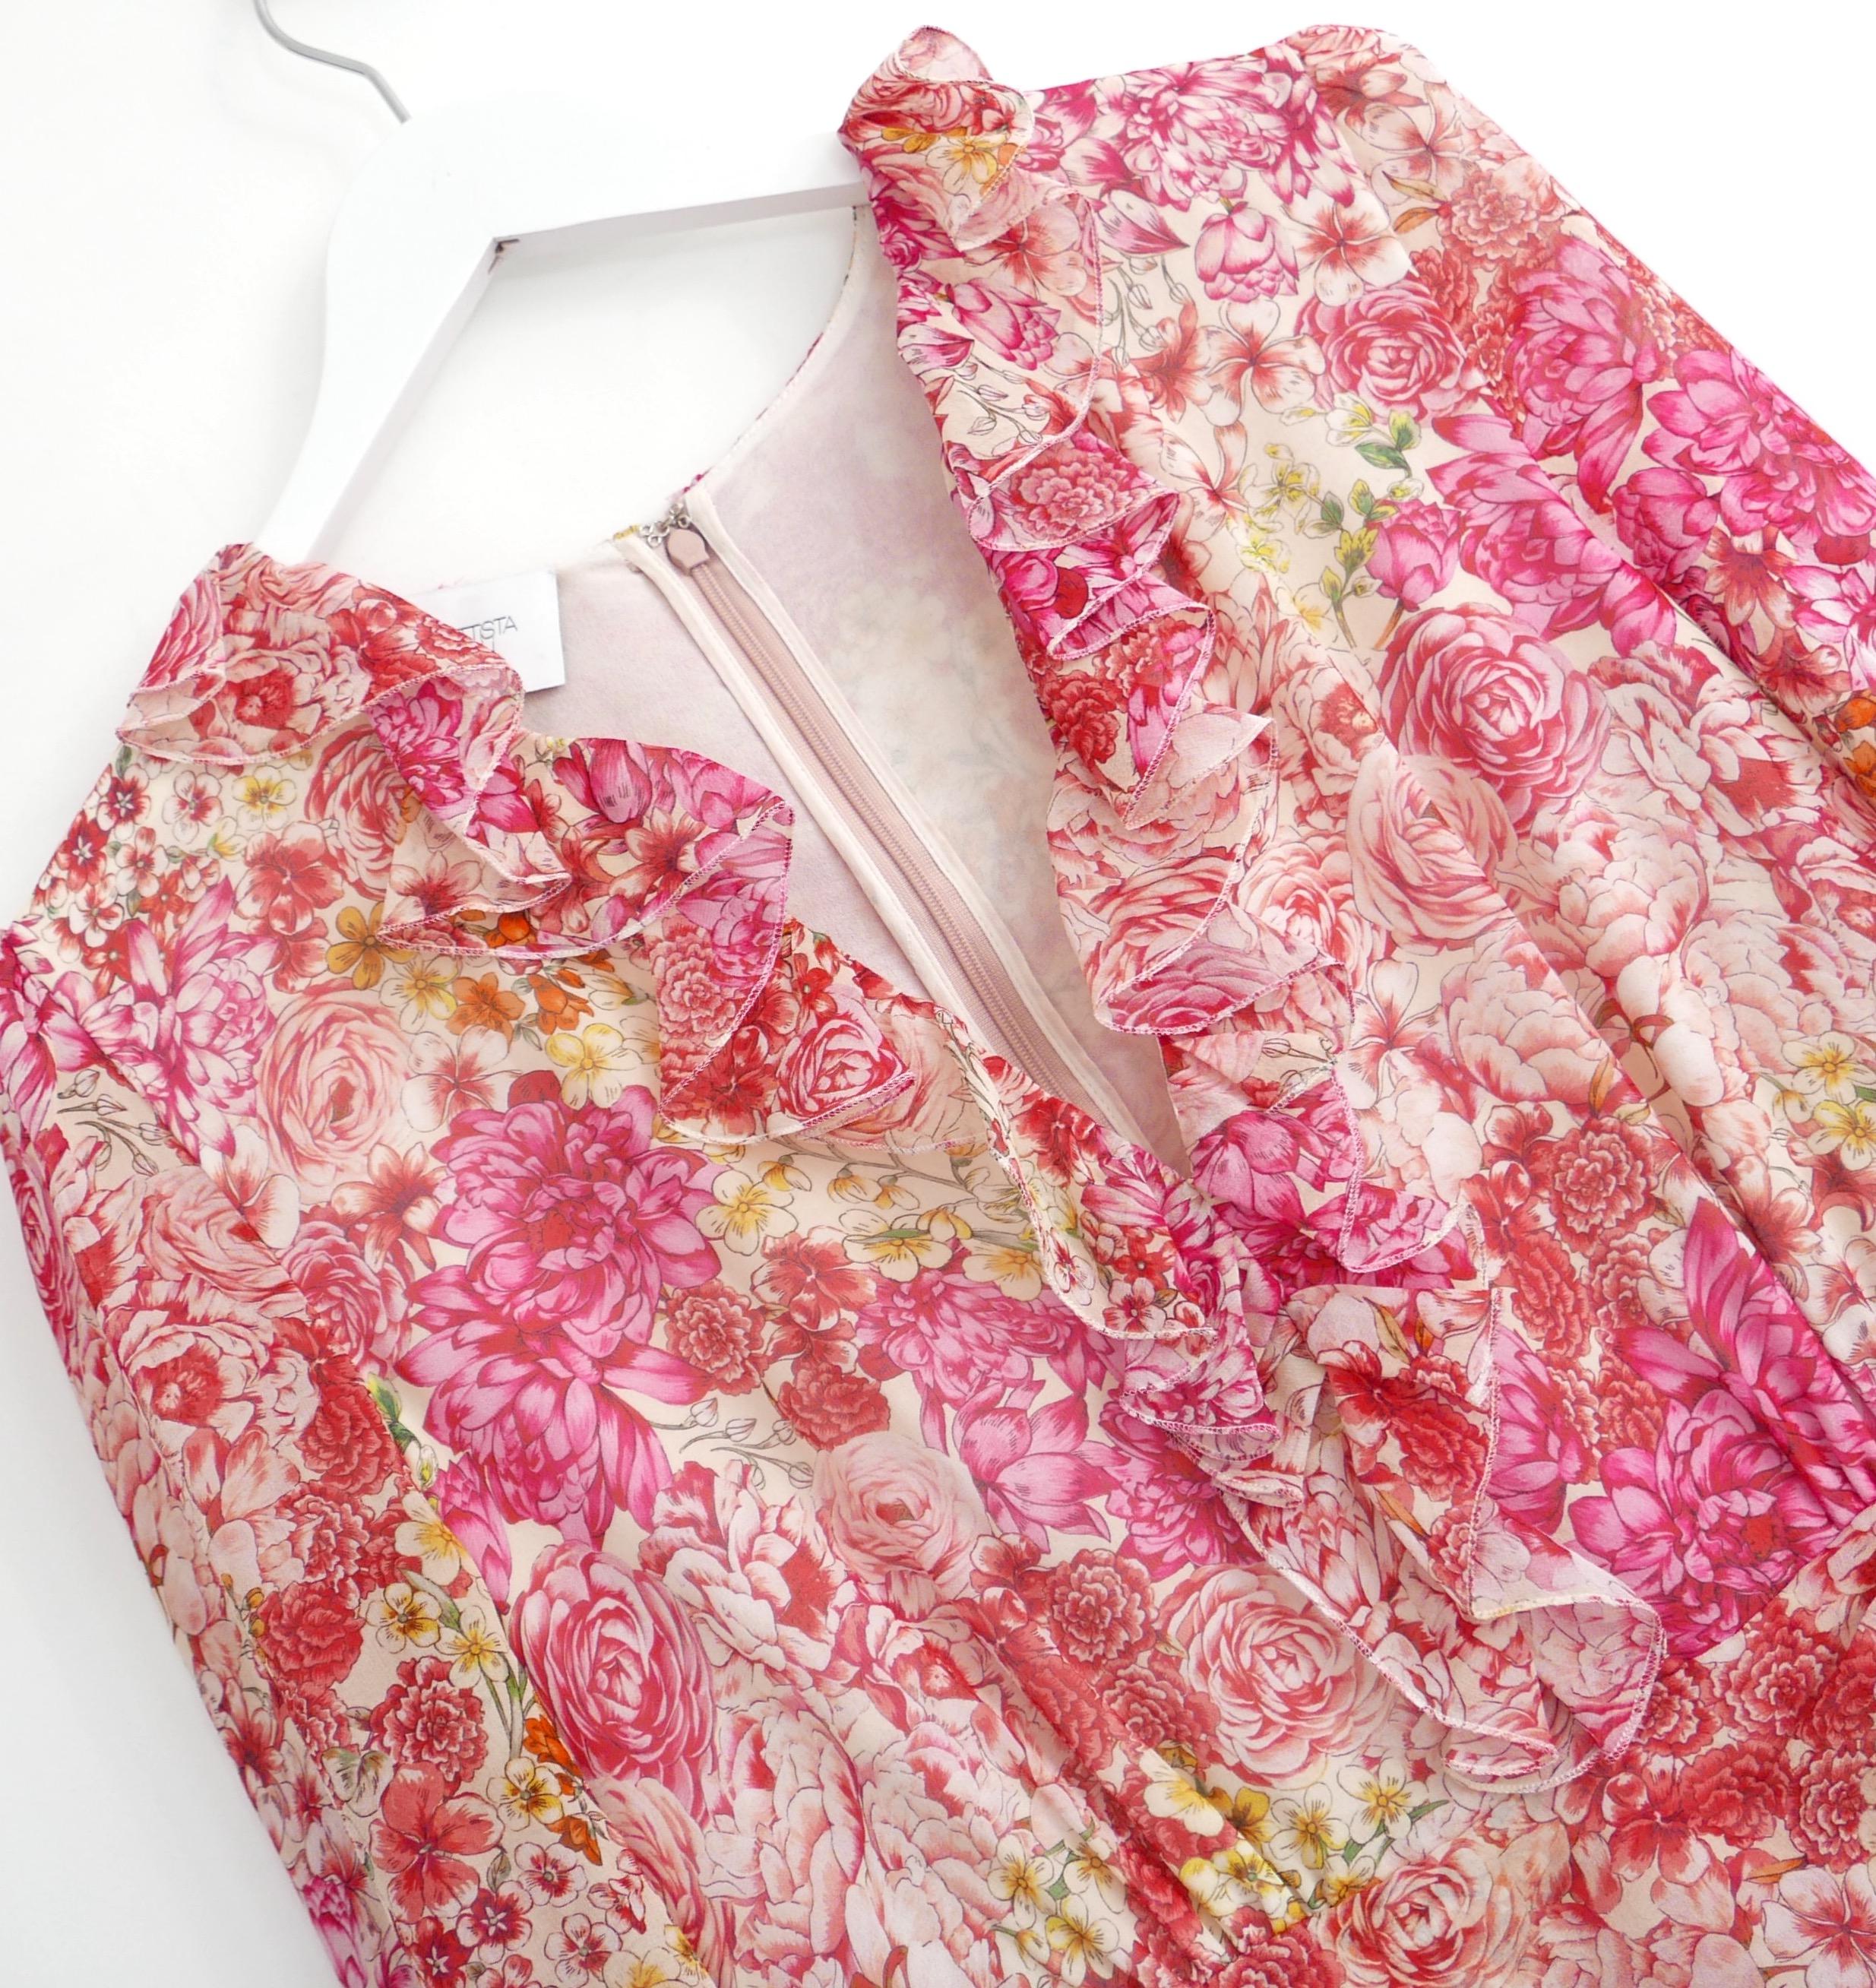 Giambattista Valli Spring 2019  Floral Silk Dress  In New Condition For Sale In London, GB